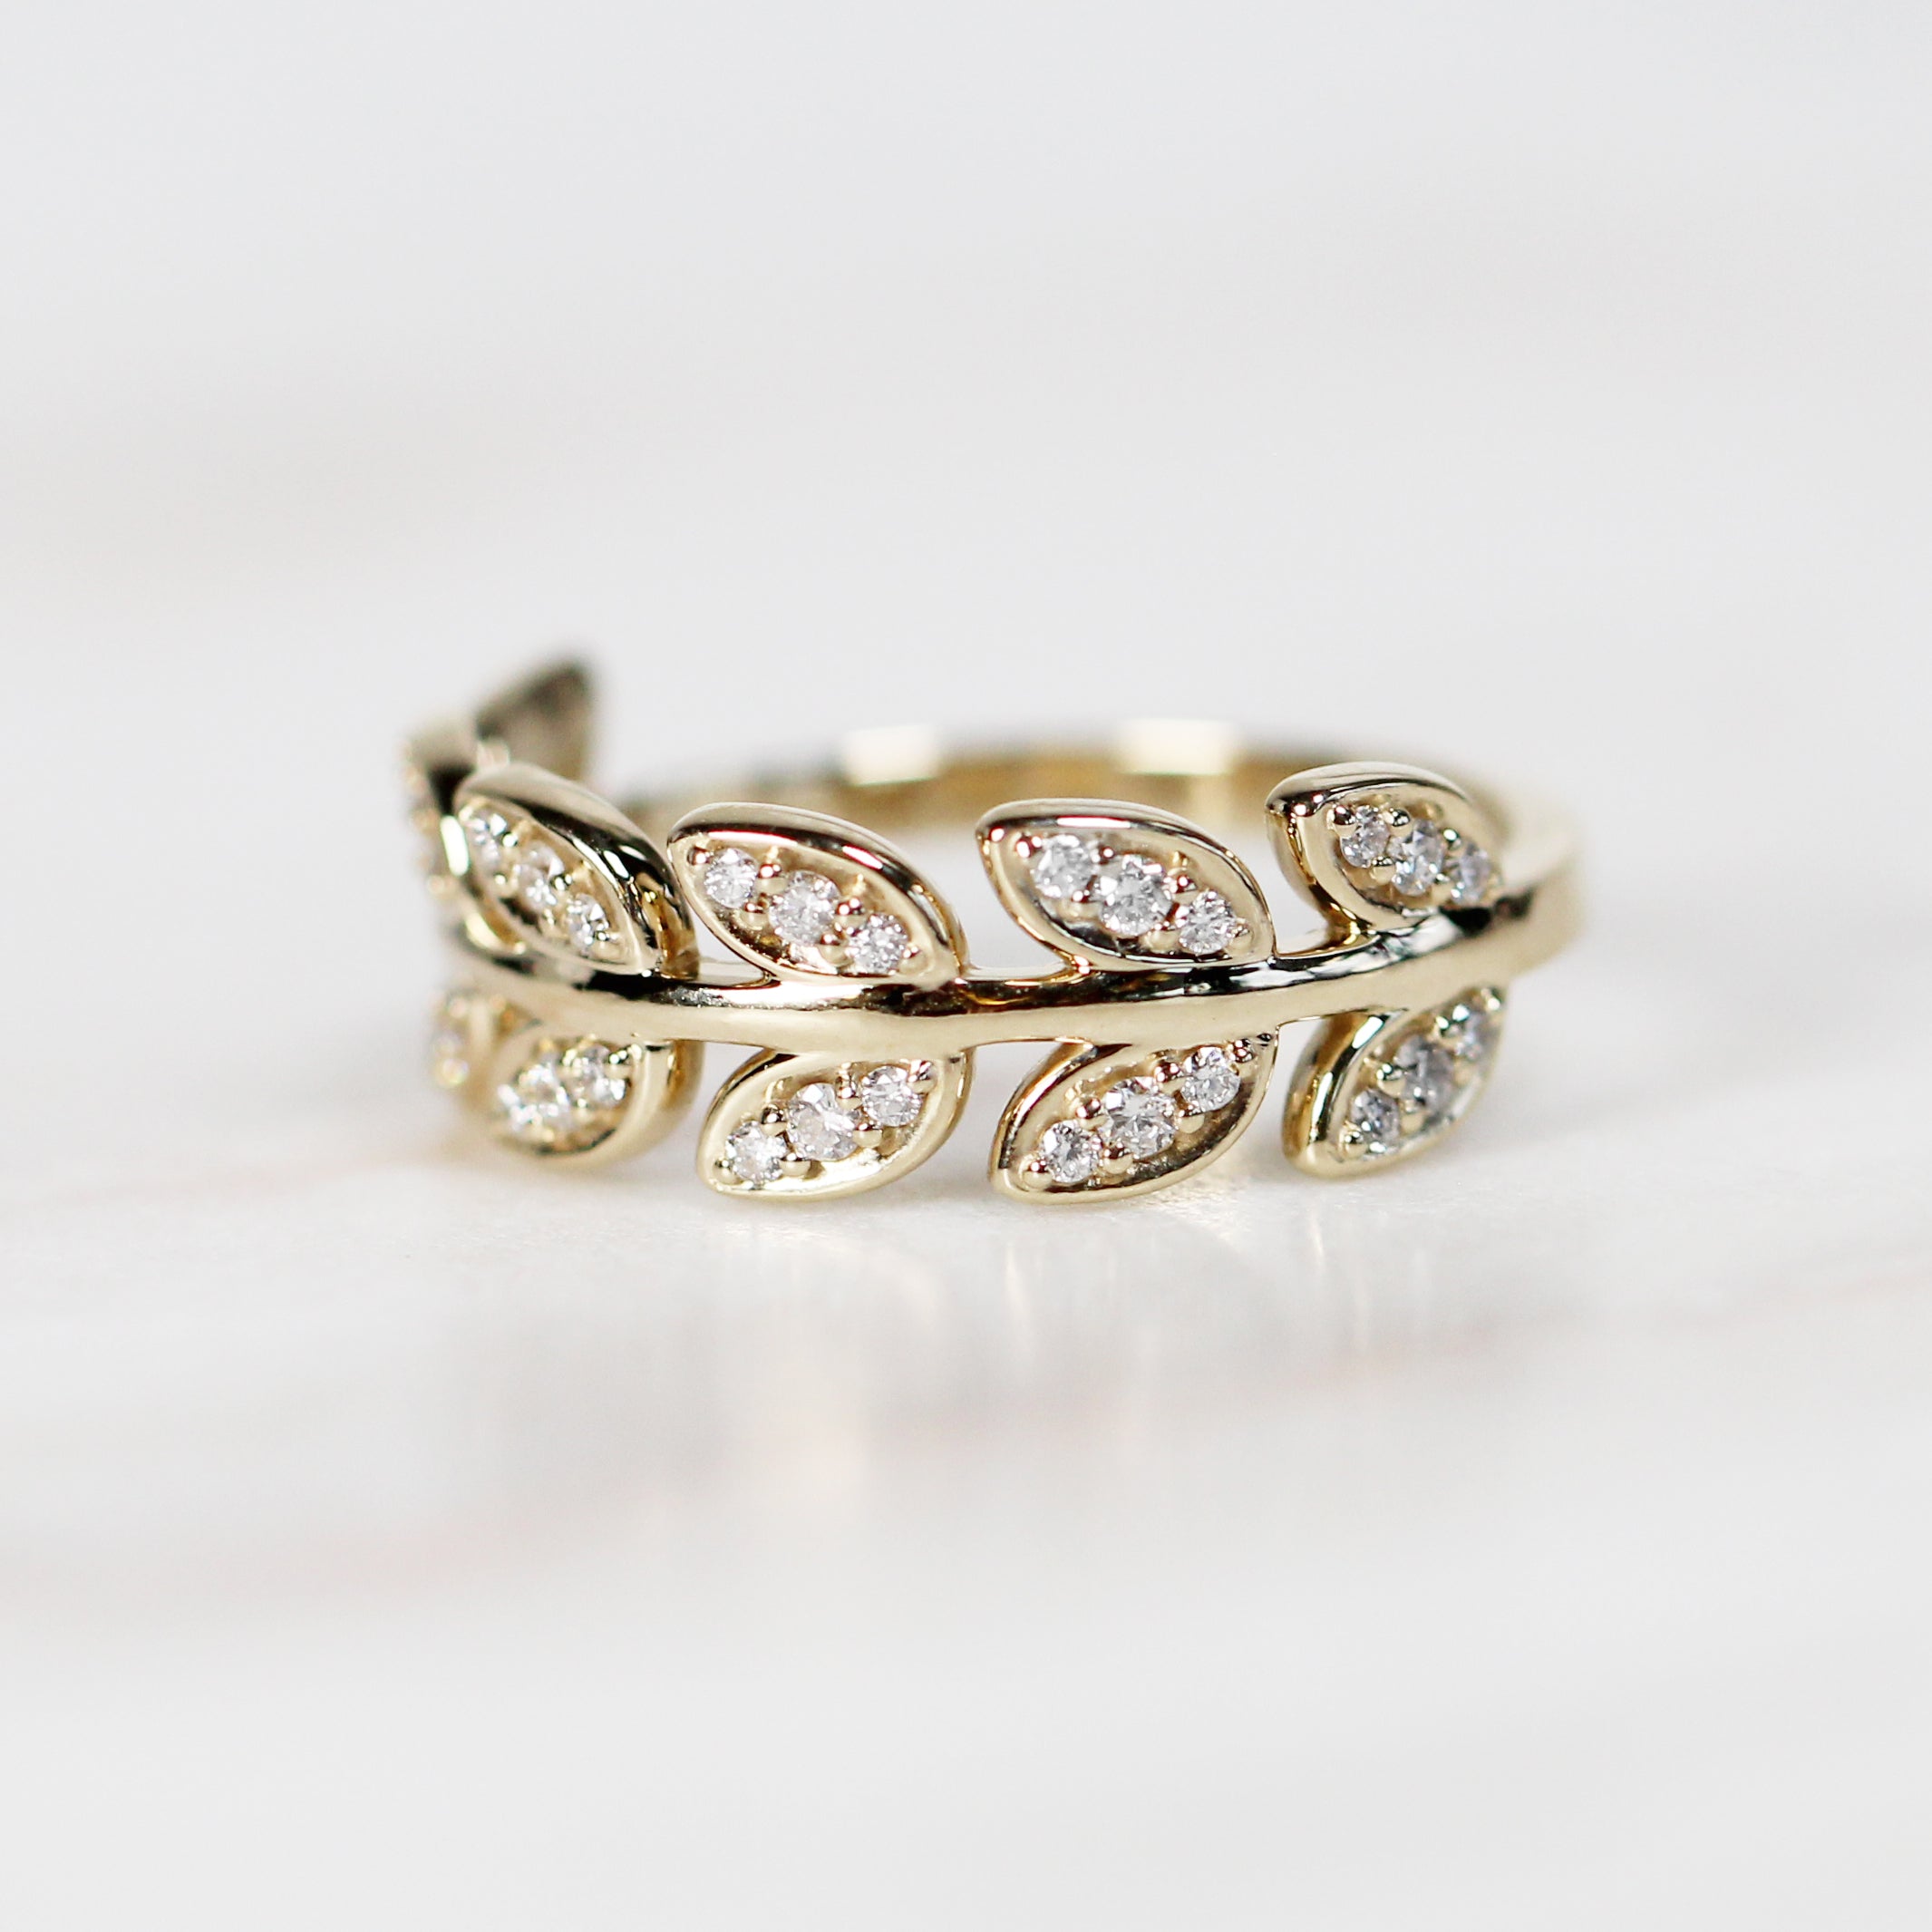 Leaf Design Silver Ring | Trendy Silver Ring - Rings - FOLKWAYS